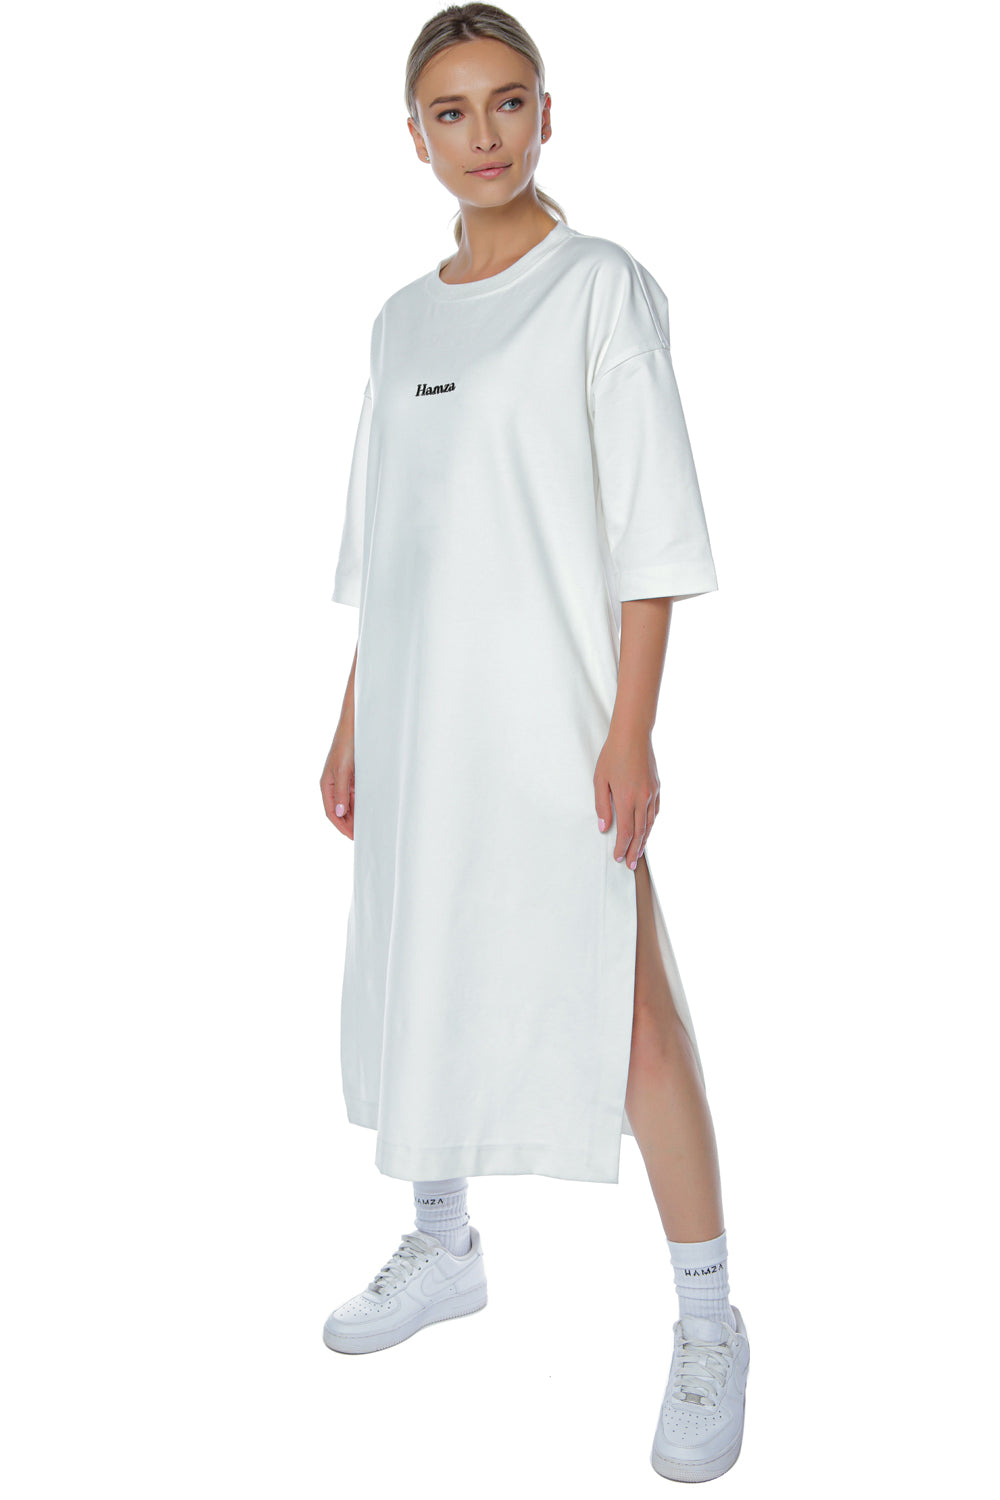 Tee rochie tricou off-white oversized brodata